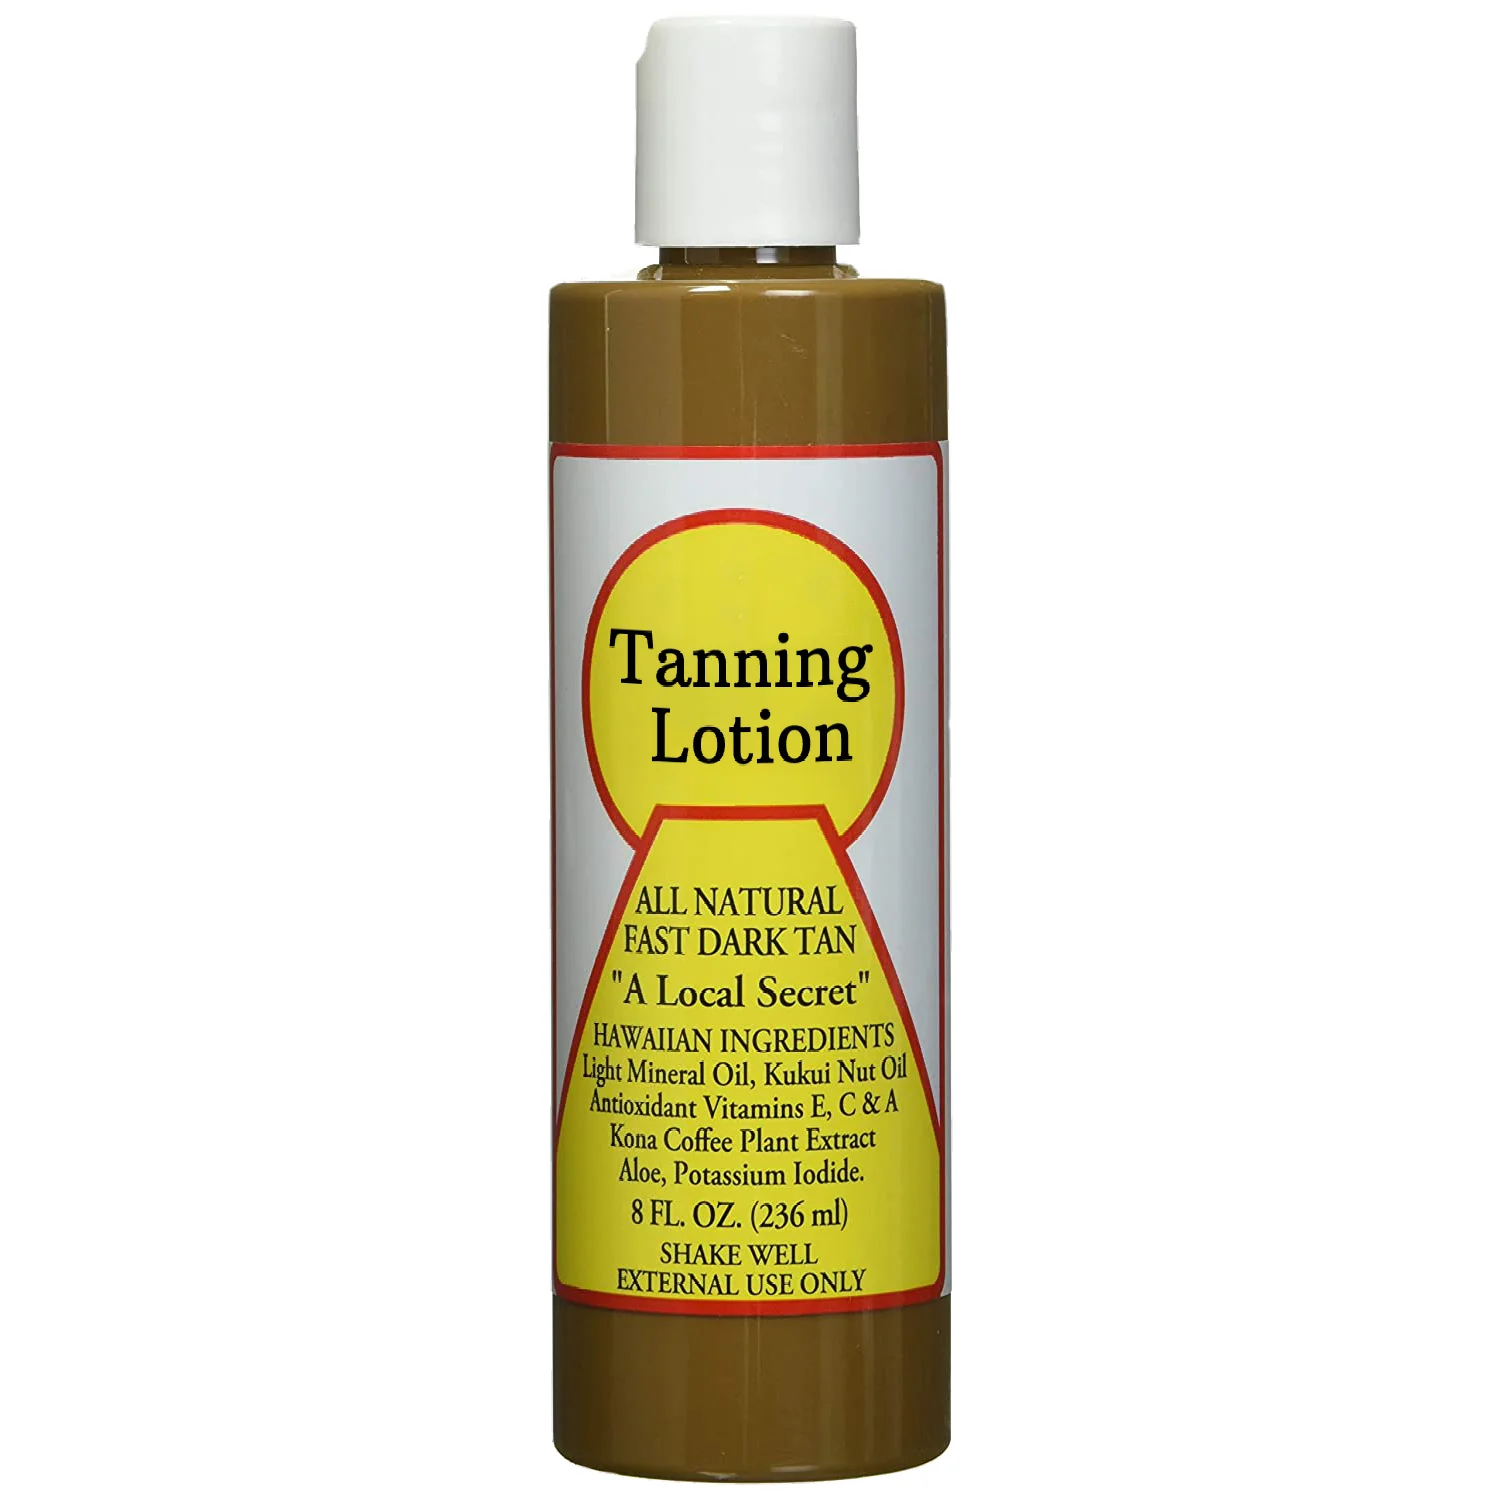 Oem Odm Sale Private Label Beauty Solution Spray Organic Dark Self-tanning Lotion Oil Australian - Buy Lotion,Organic Lotion,Tanning Gel Product on Alibaba.com